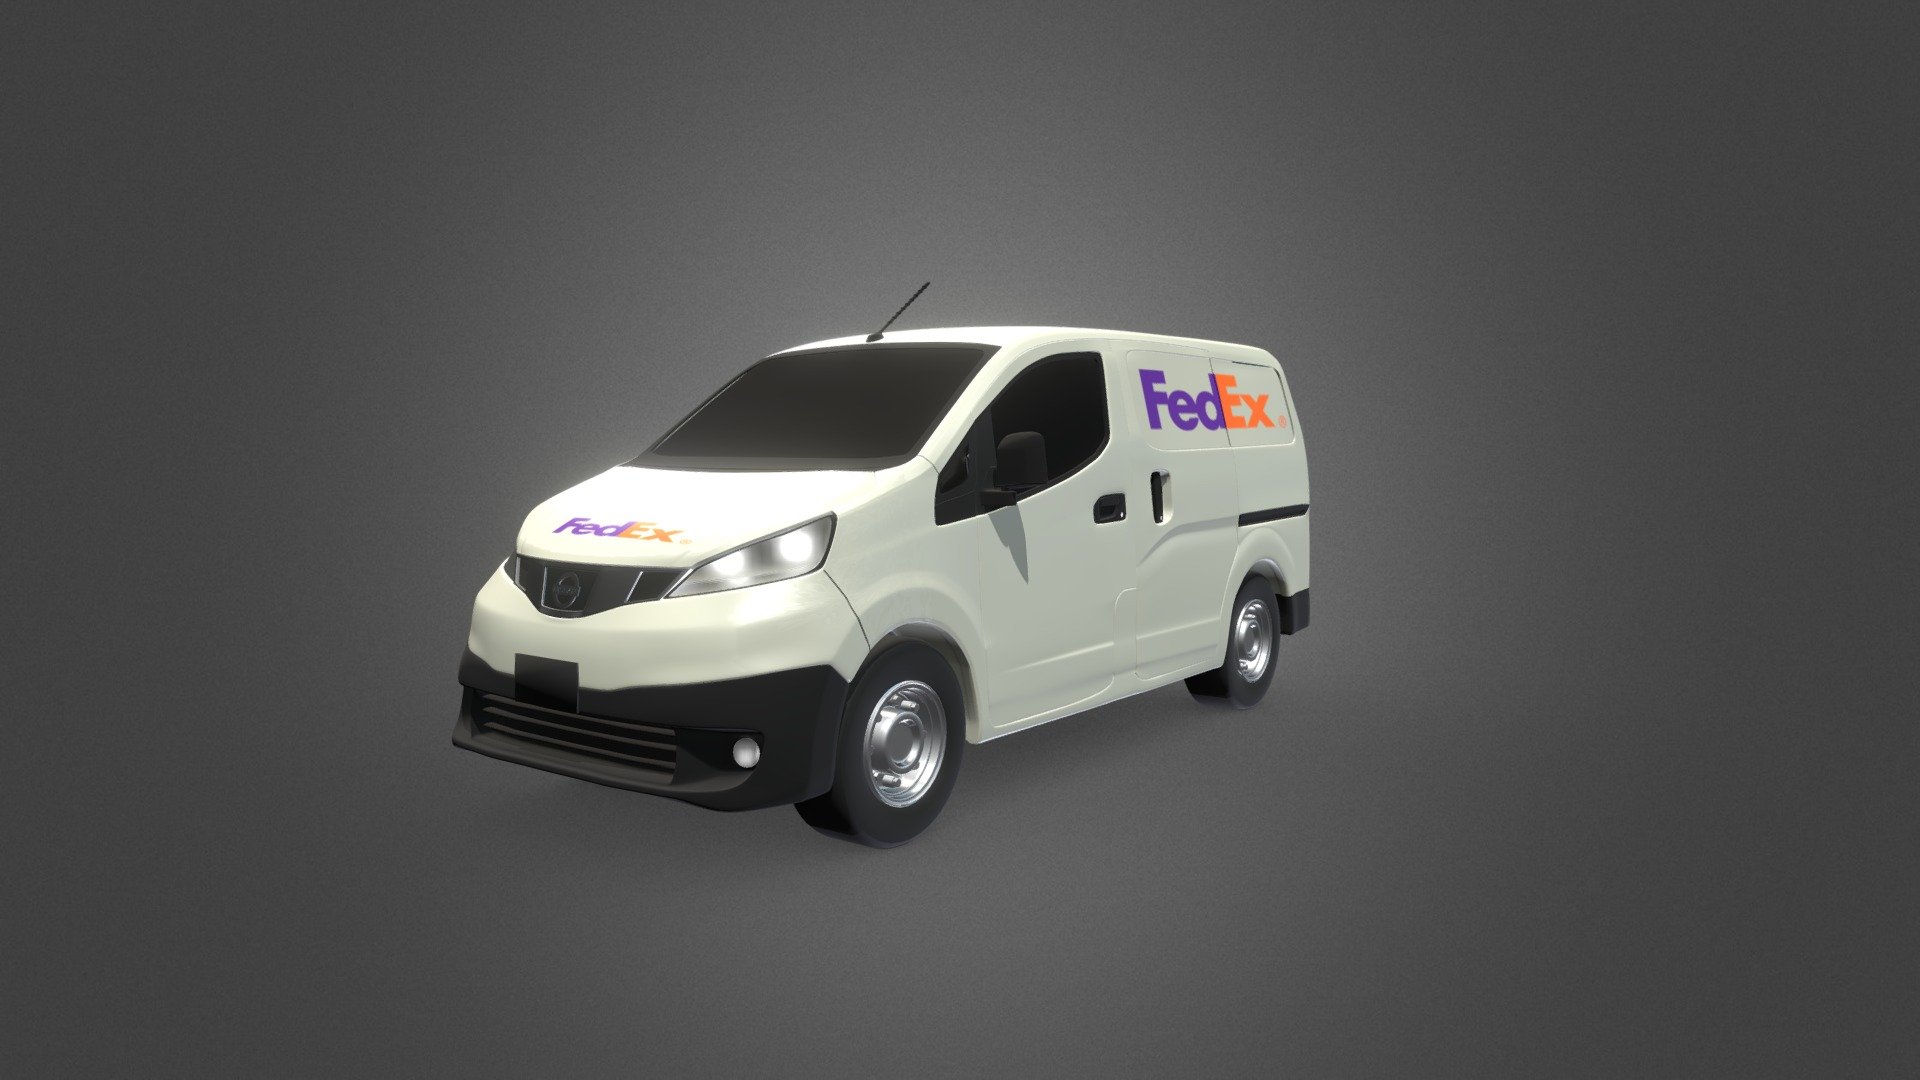 Fedex express delivery minivan.

All made in Blender 2.9
Hope you like it! - FedEx van - Download Free 3D model by memoov (@movartD) 3d model